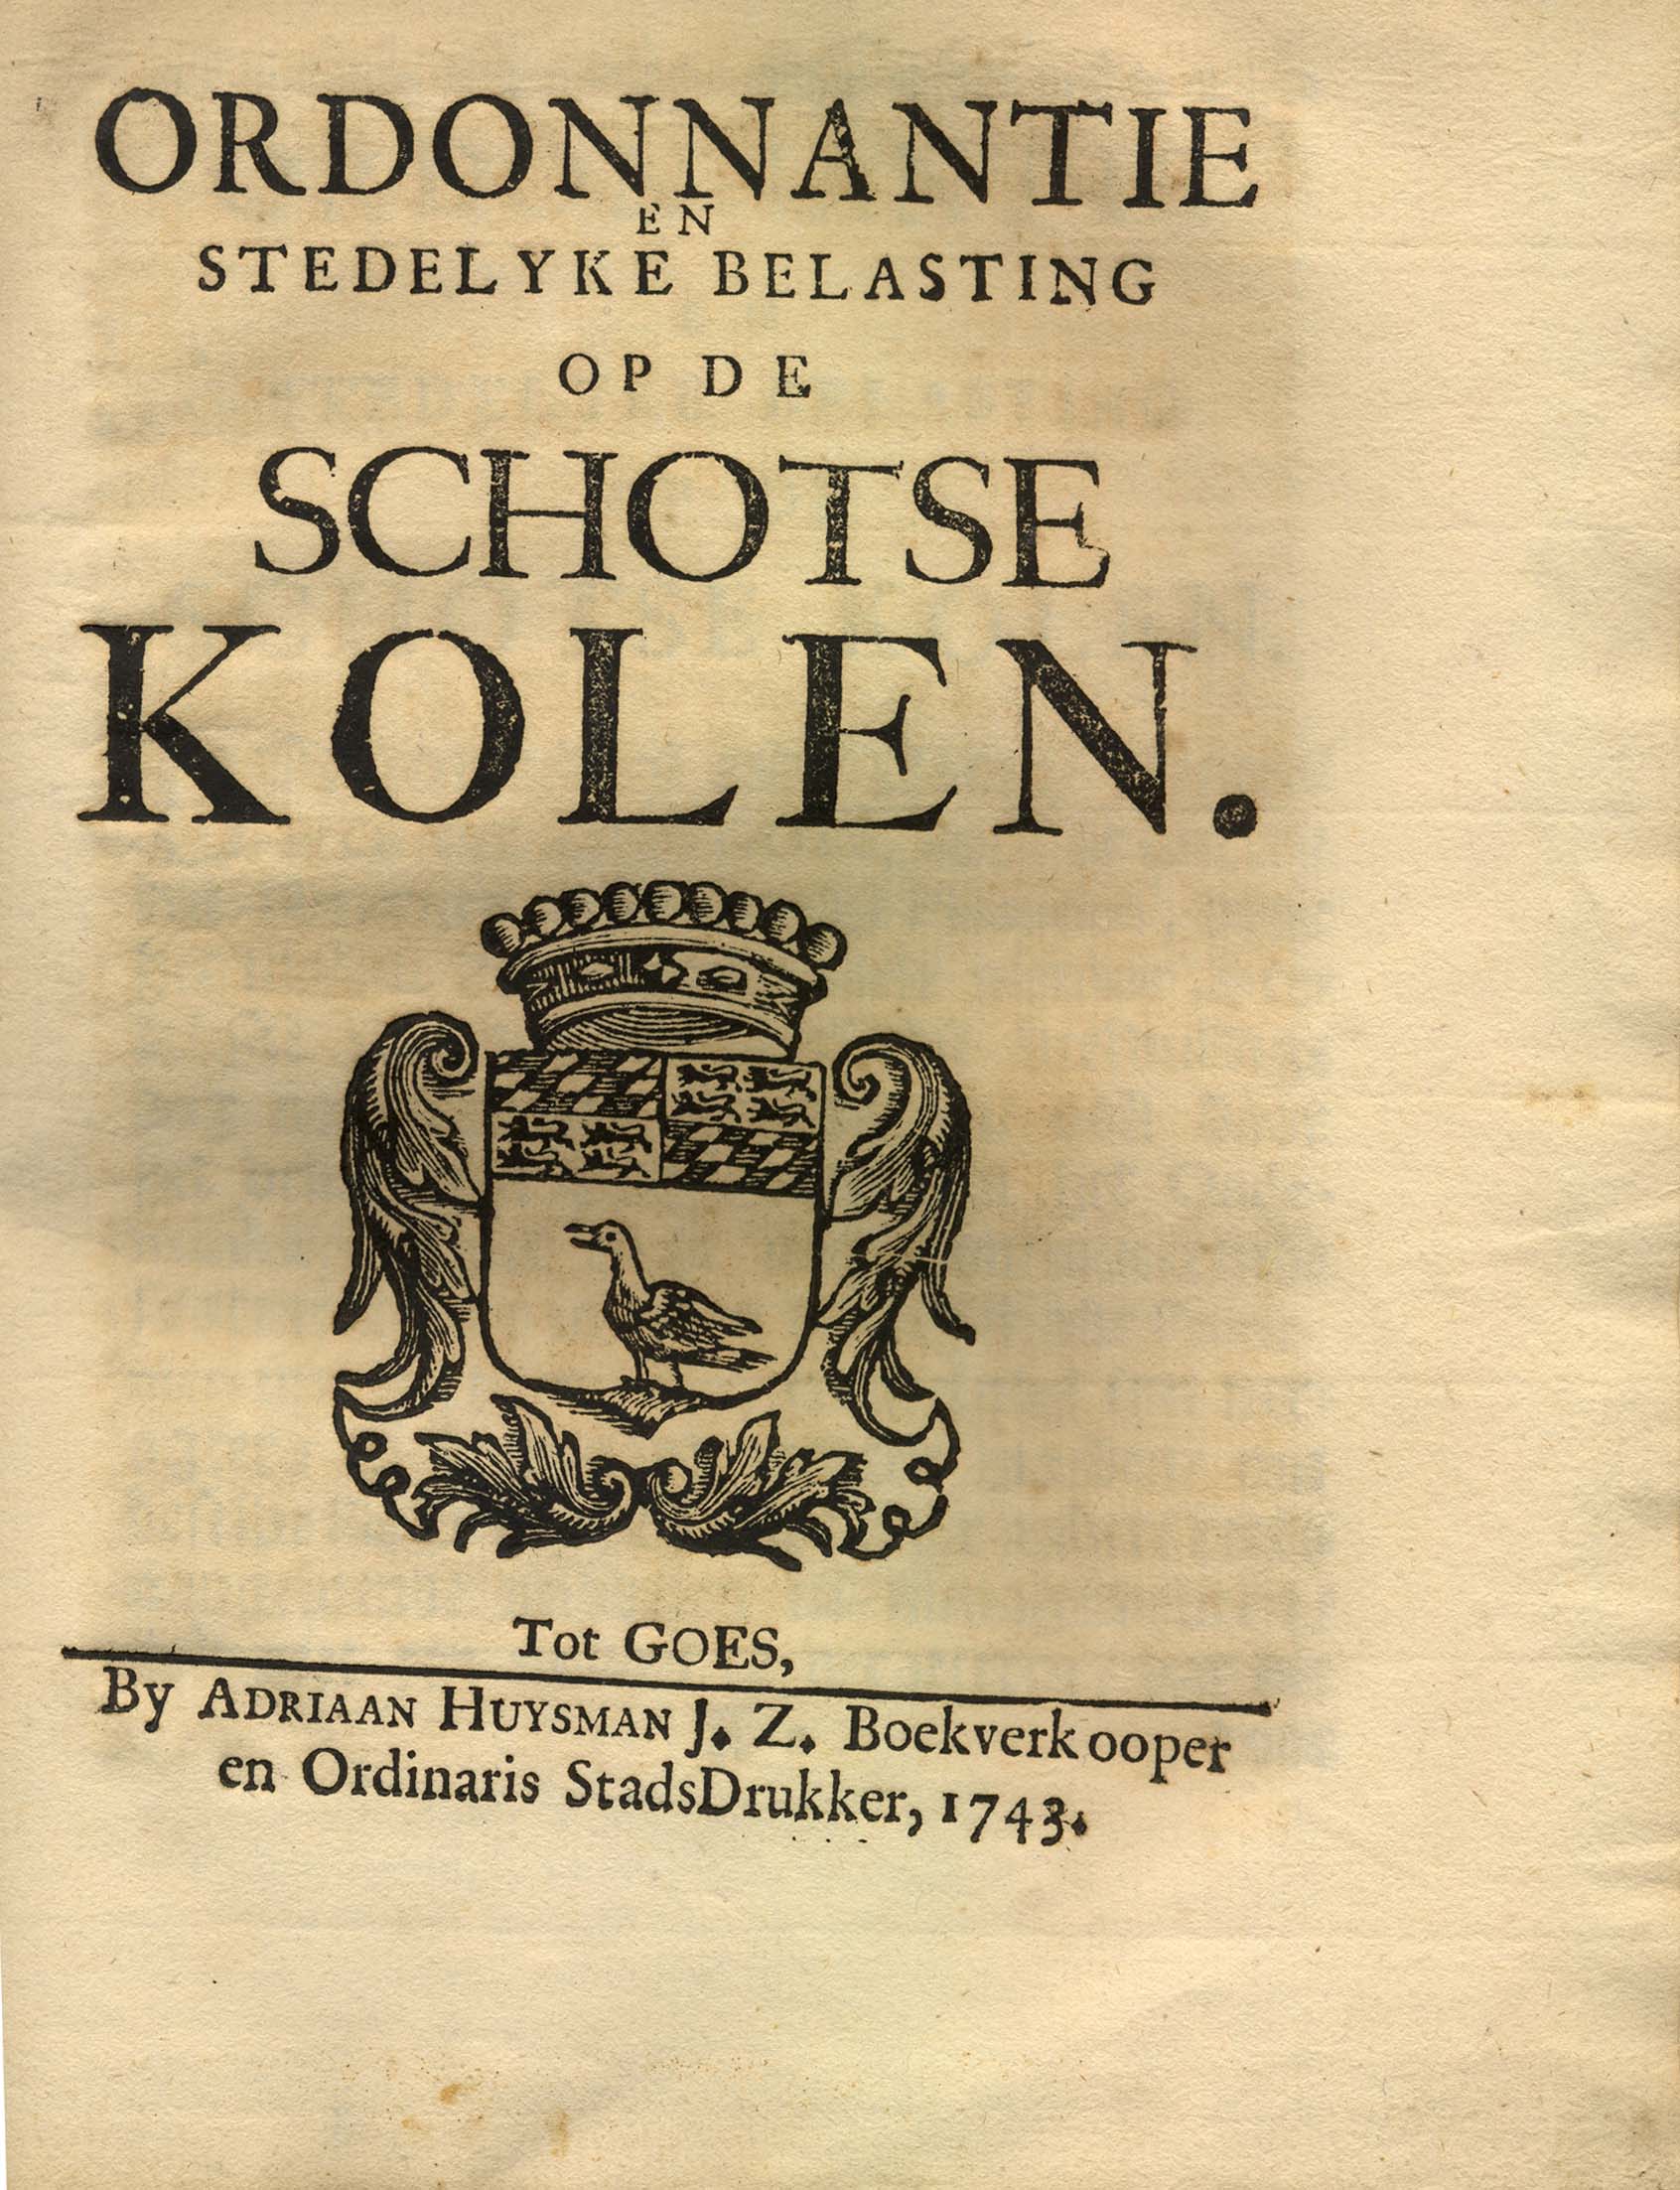 Ordonnantie op de Schotse Kolen, 1743.